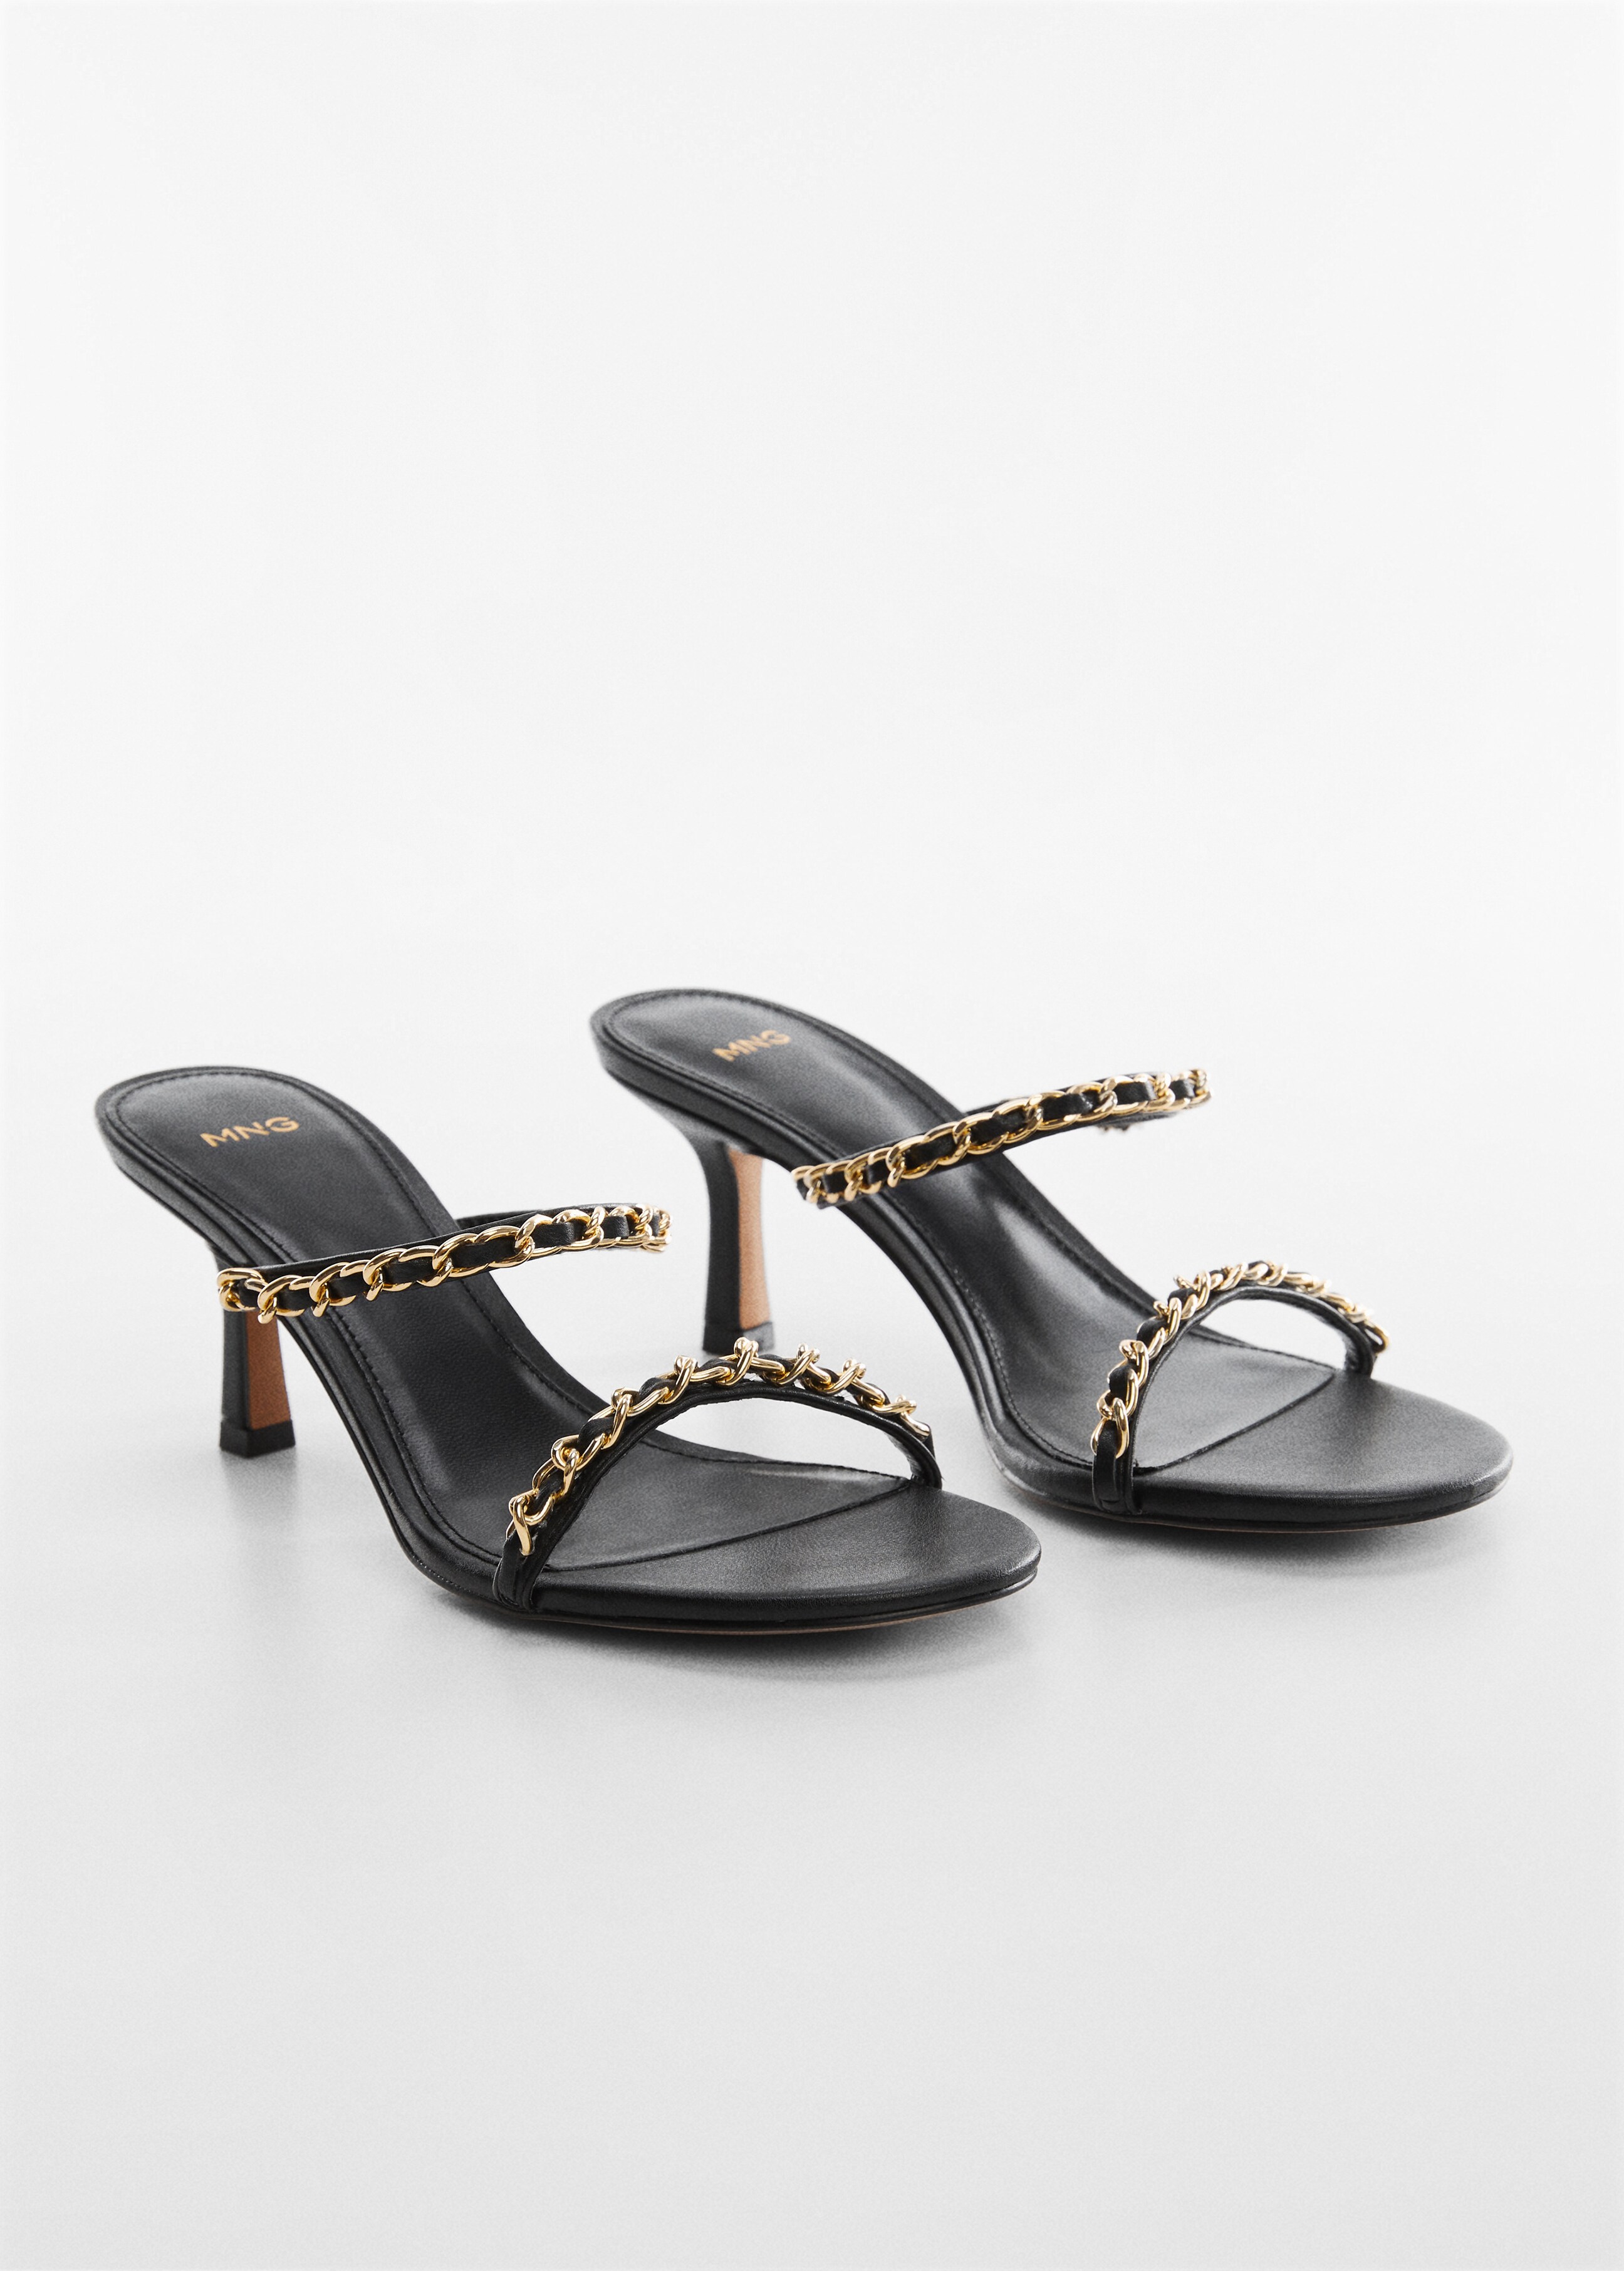 High-heeled sandals with chain detail - Medium plane